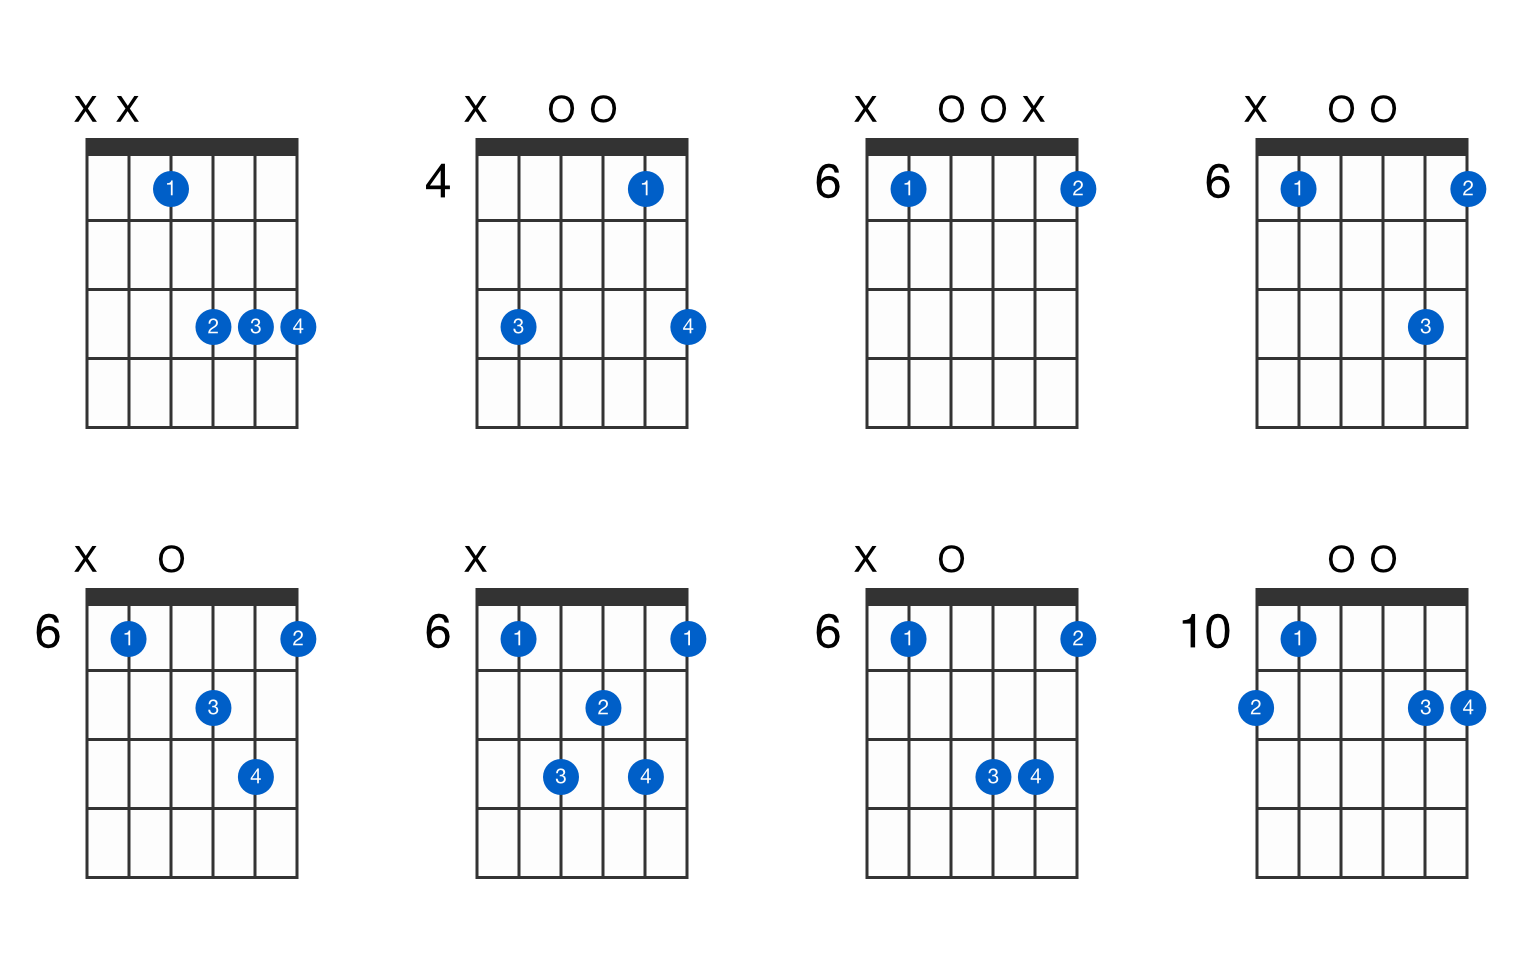 D Sharp - E Flat Major Seventh Guitar Chord Diagrams